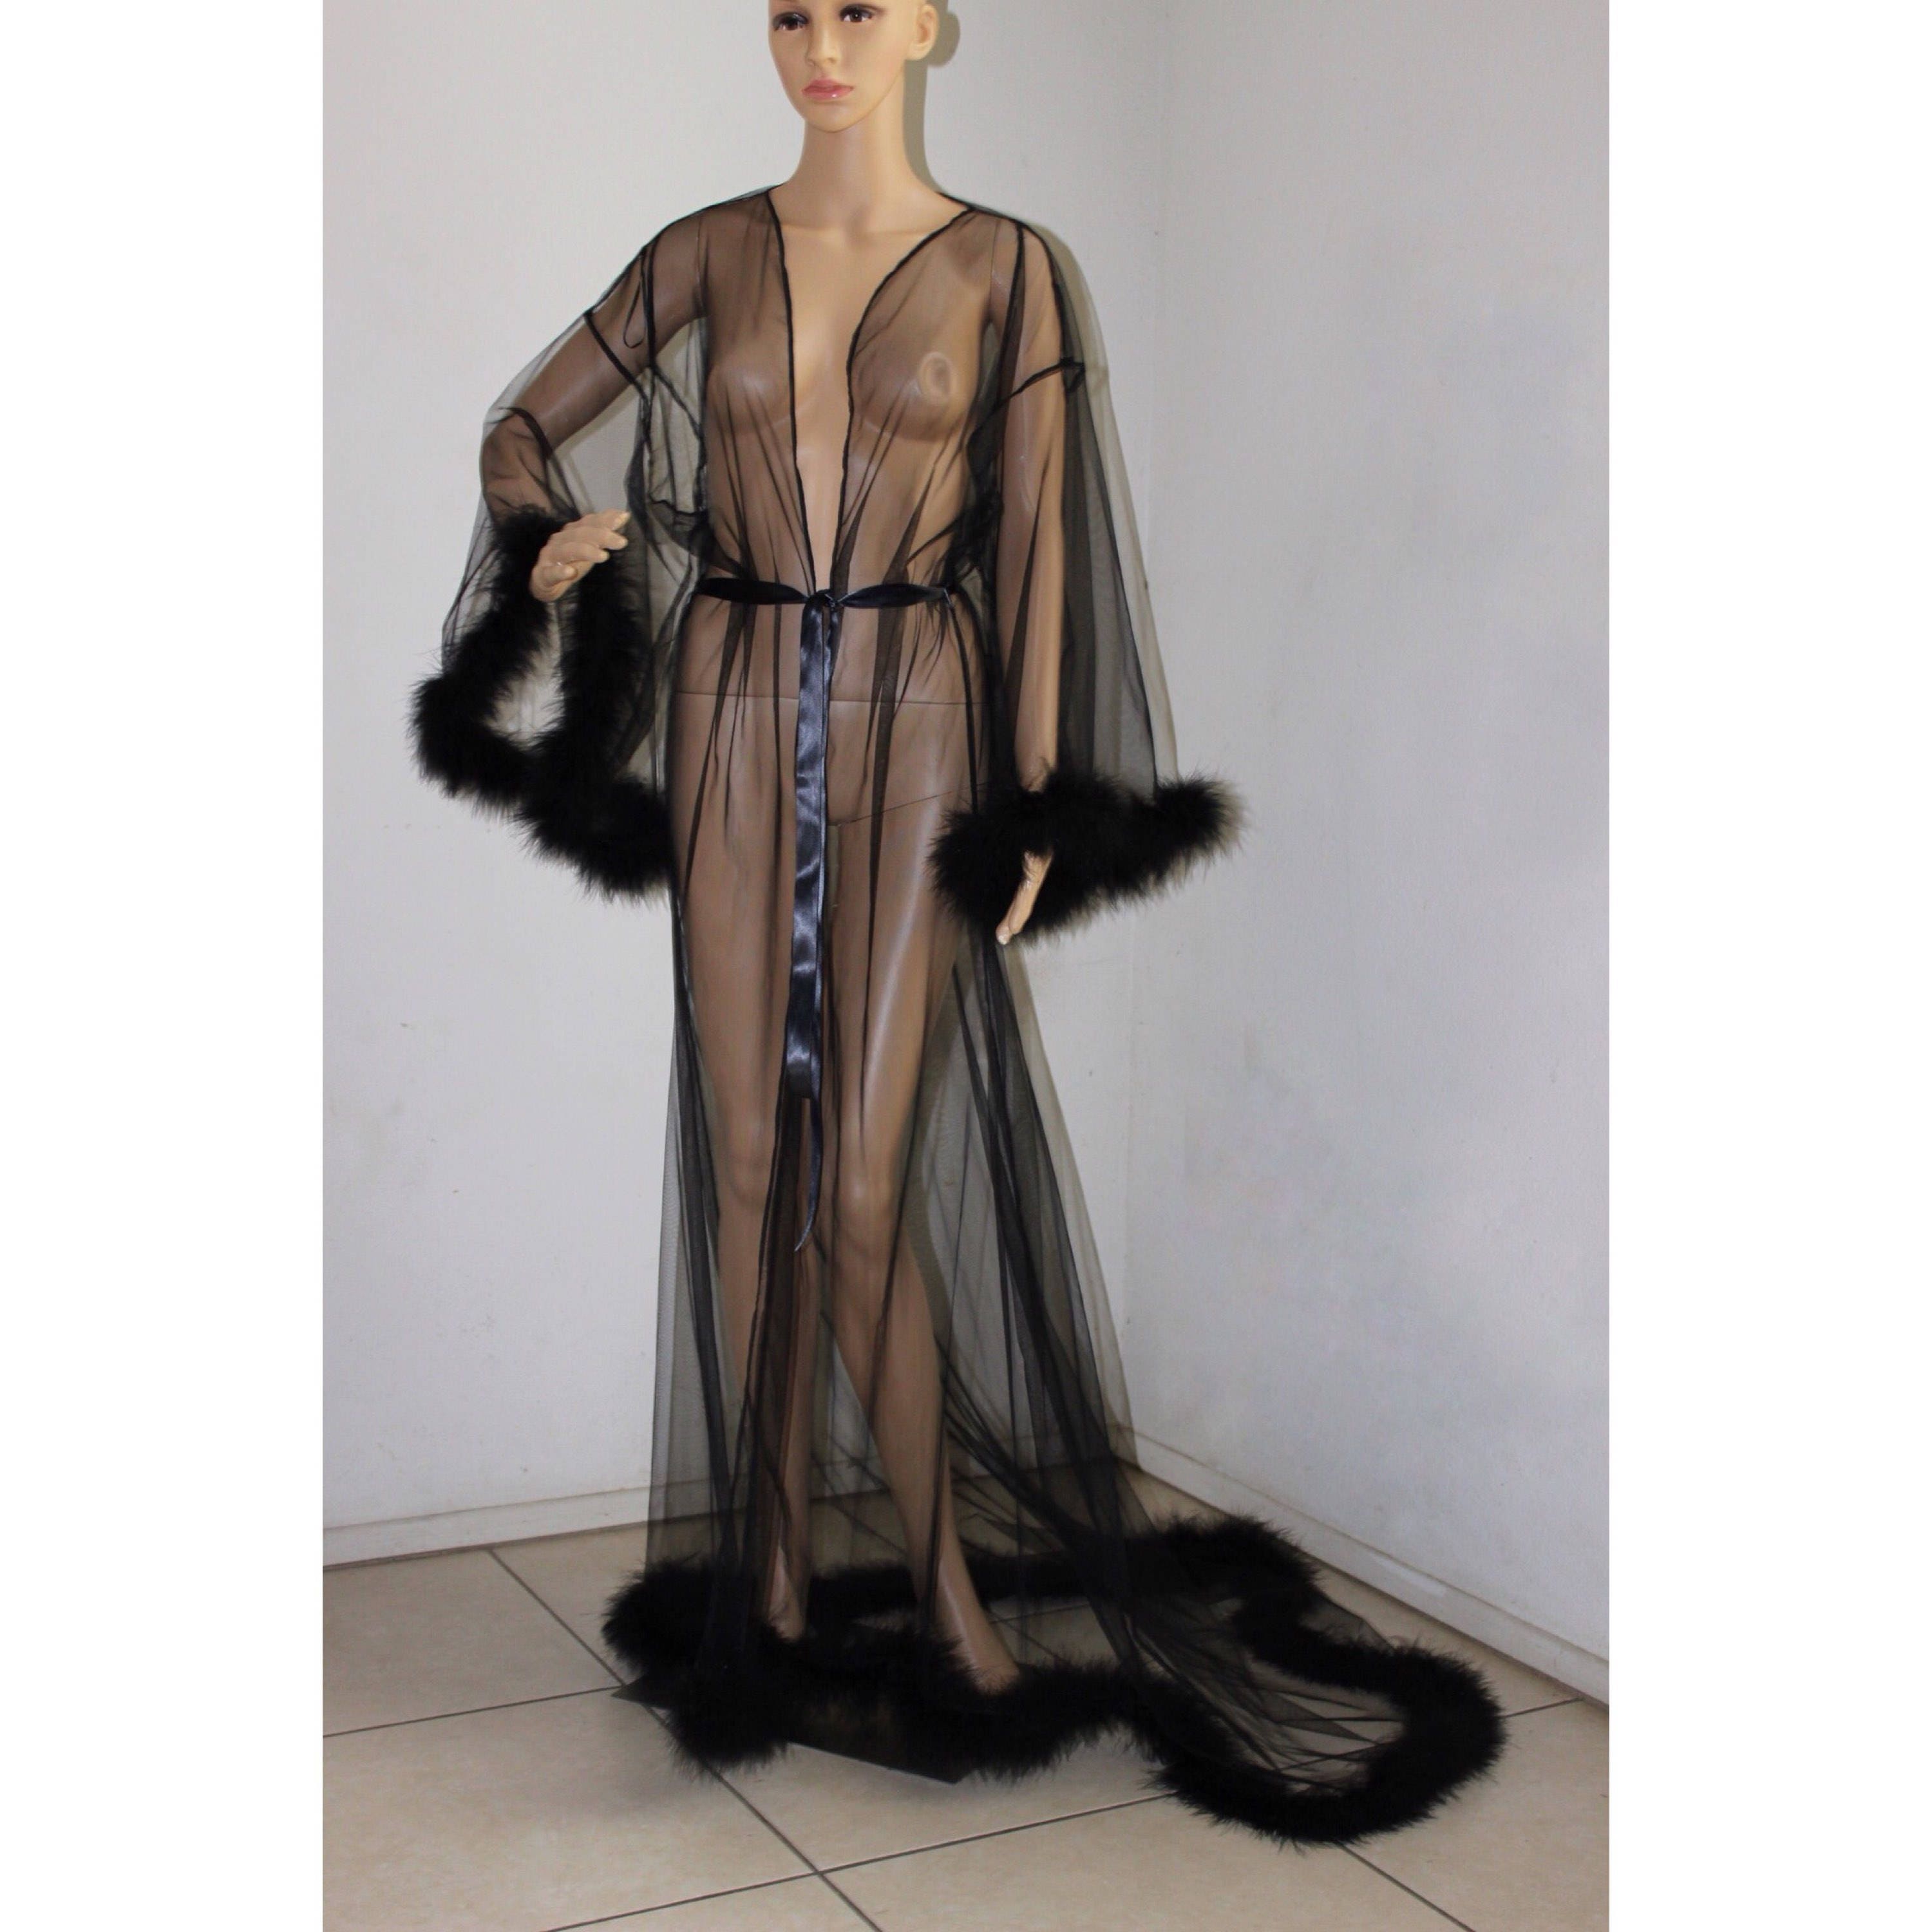 Giselle Black Sheer Robe With Fur Trim Satin Ribbon Ties